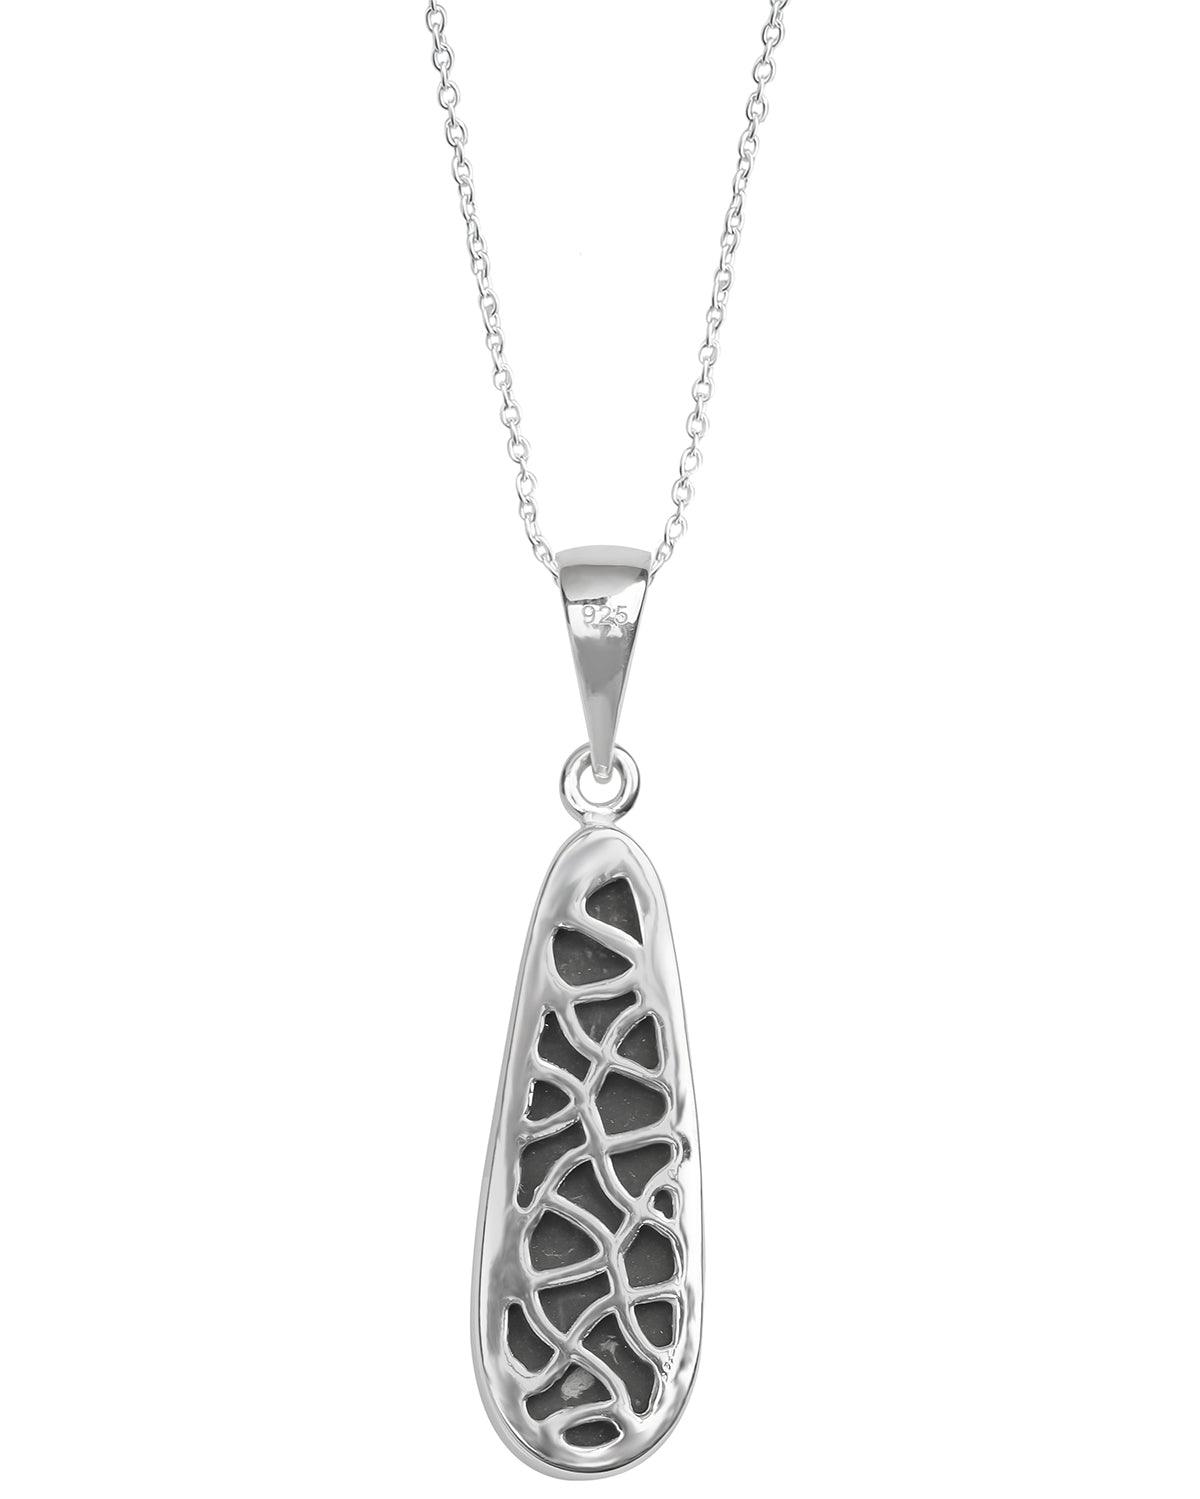 7 Ct. Ammolite 925 Sterling Silver Necklace Pendant Jewelry - YoTreasure